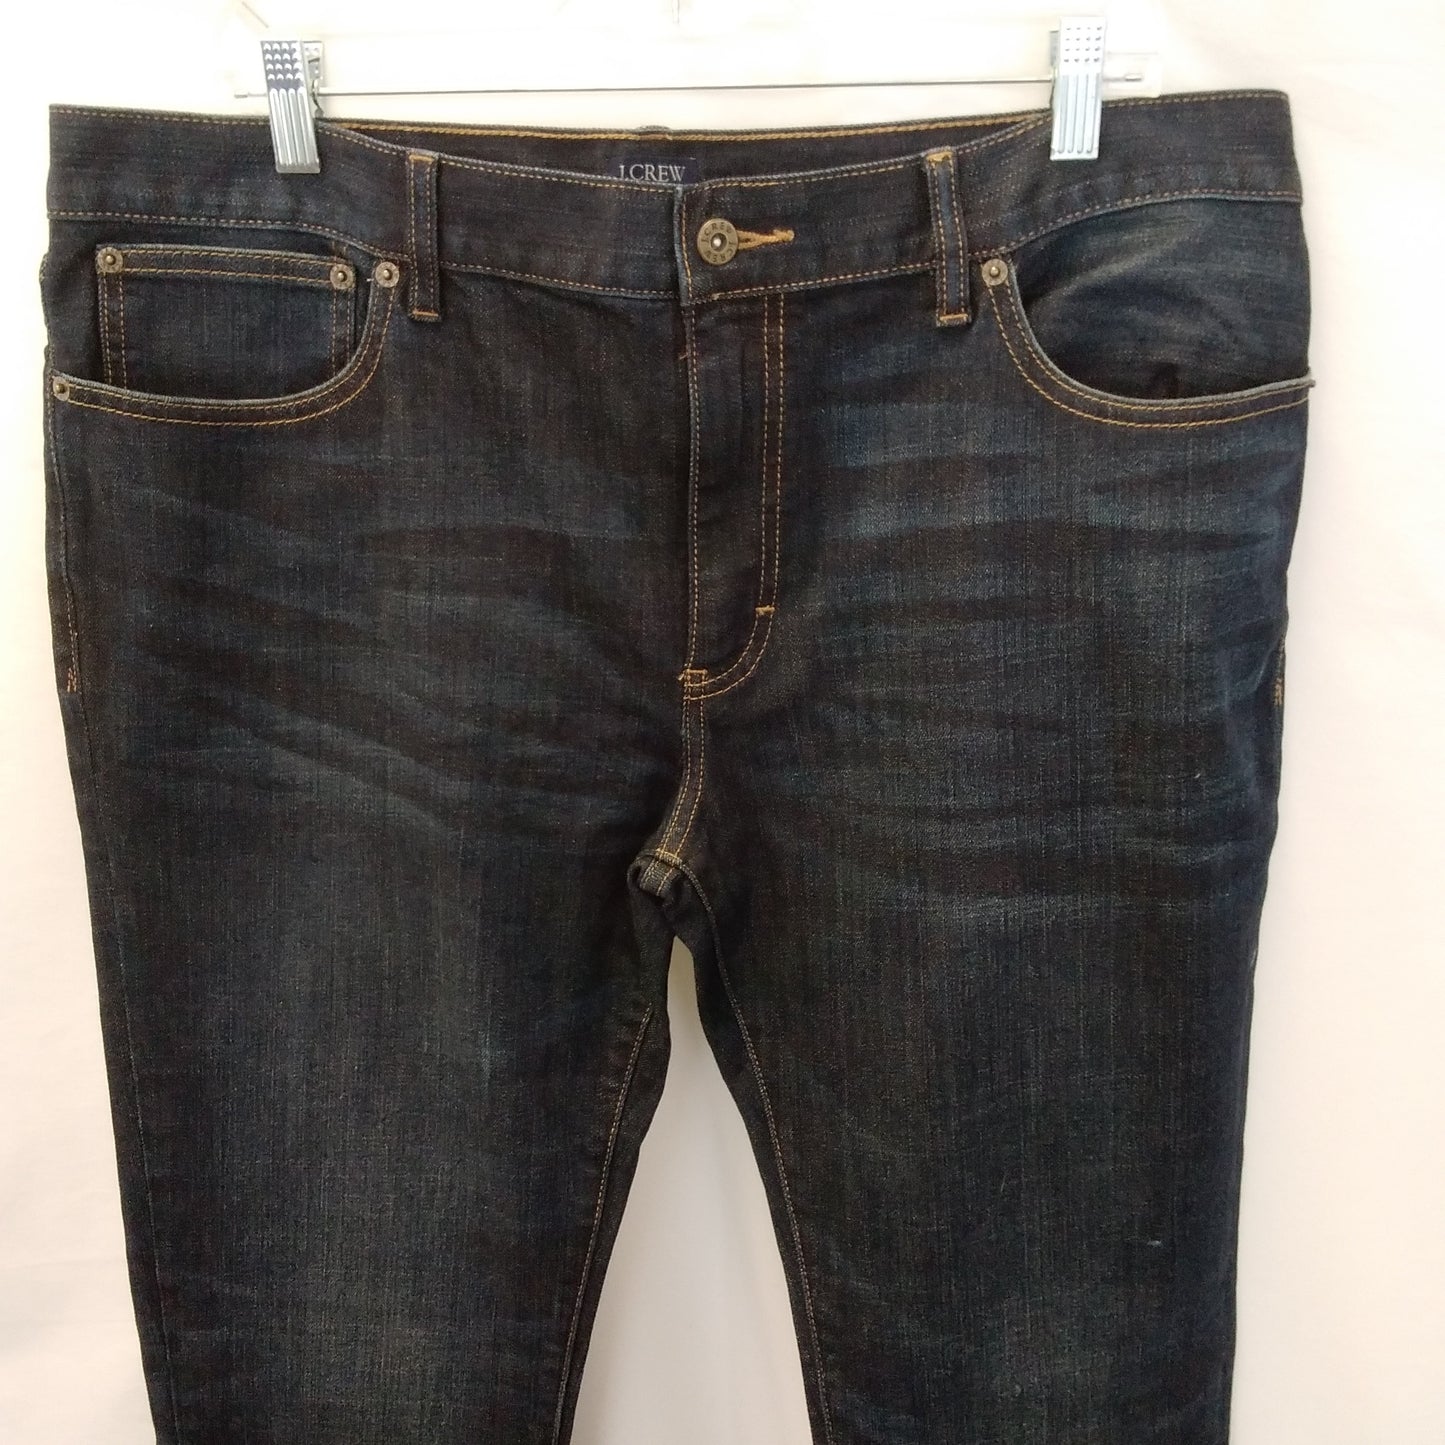 NWT - J. Crew Men’s Driggs Denim Blue Jeans - Size: 36x32